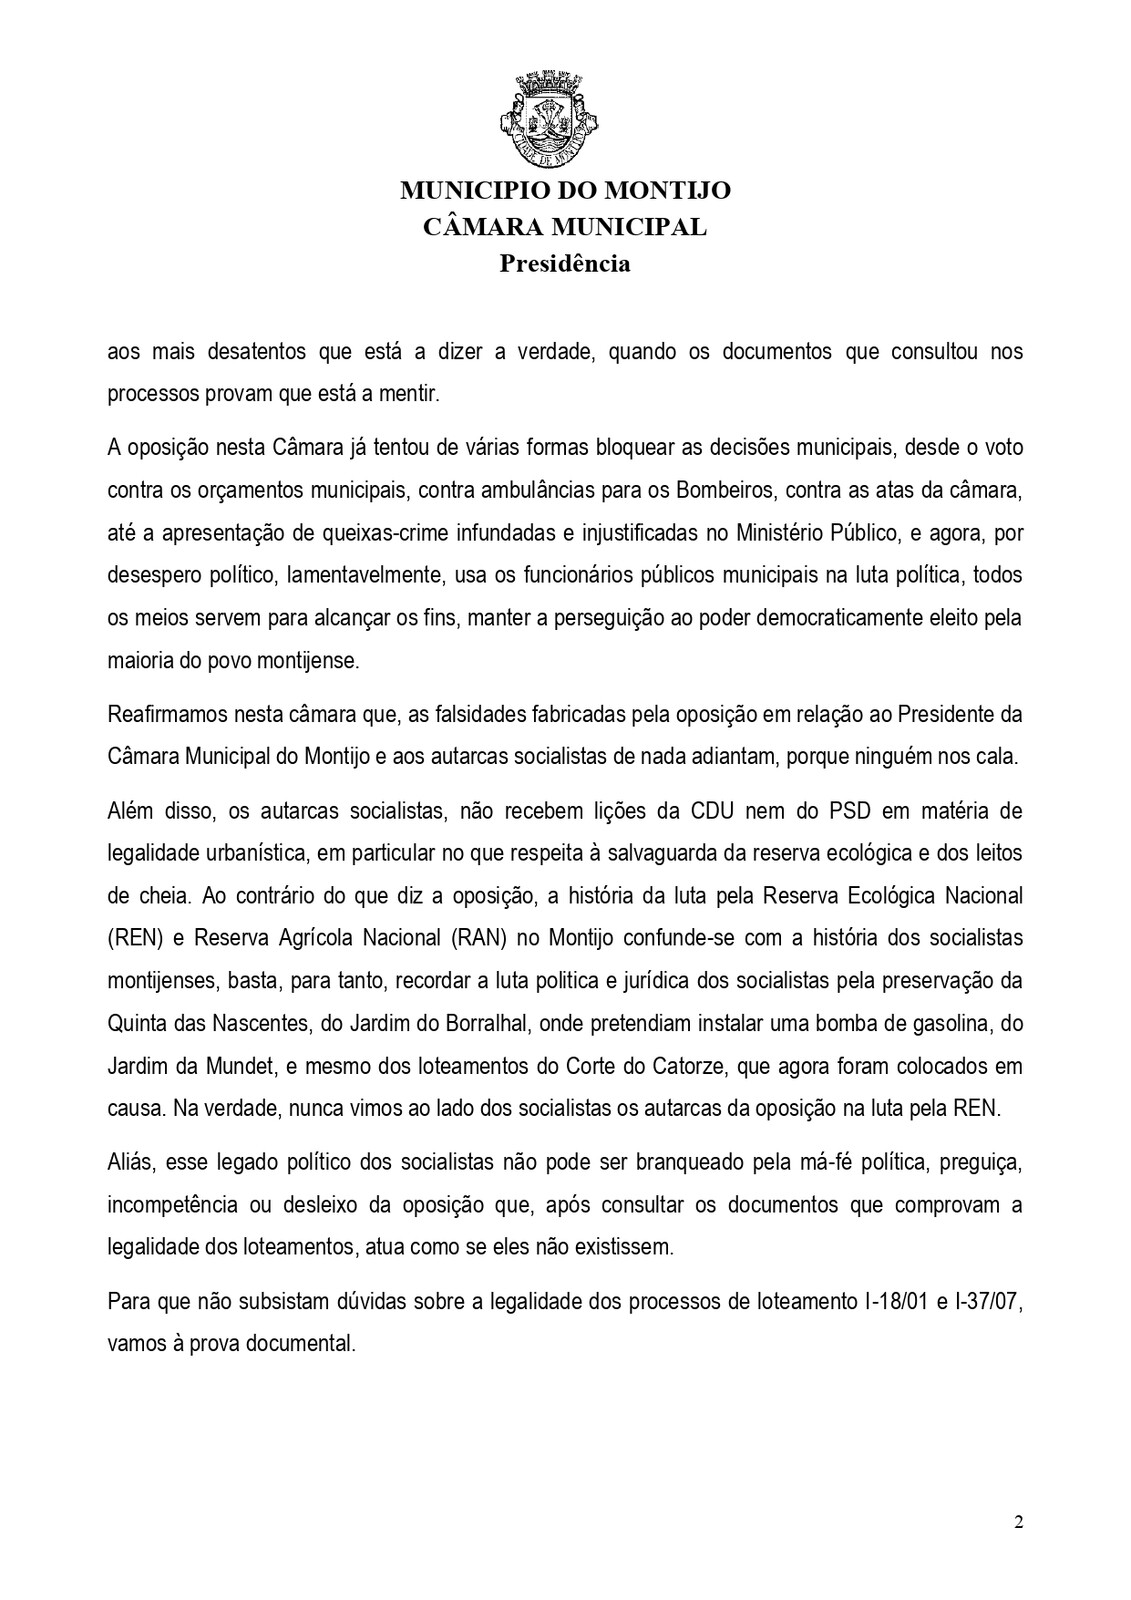 a_legalidade_dos_loteamentos_i_18_01_e_i_37_07_page_0002